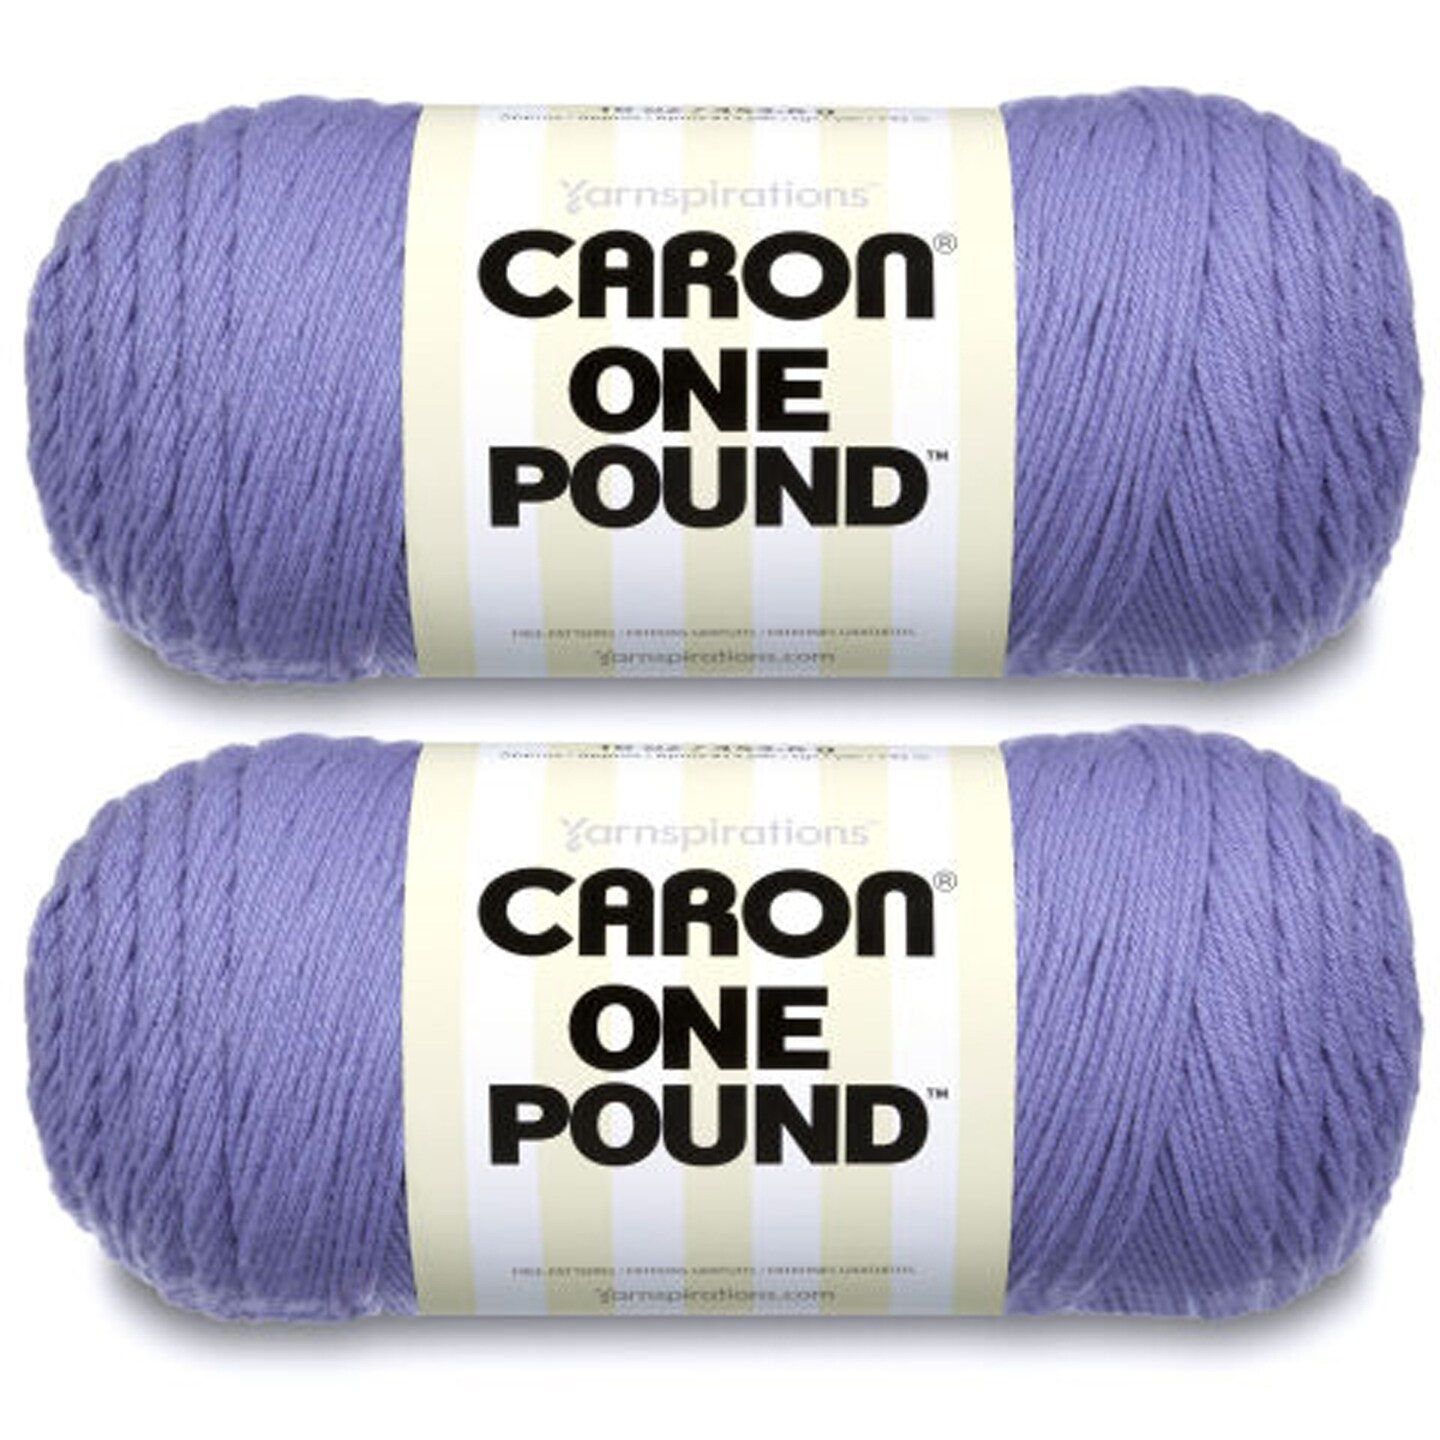 Caron One Pound Yarn, Yarnspirations